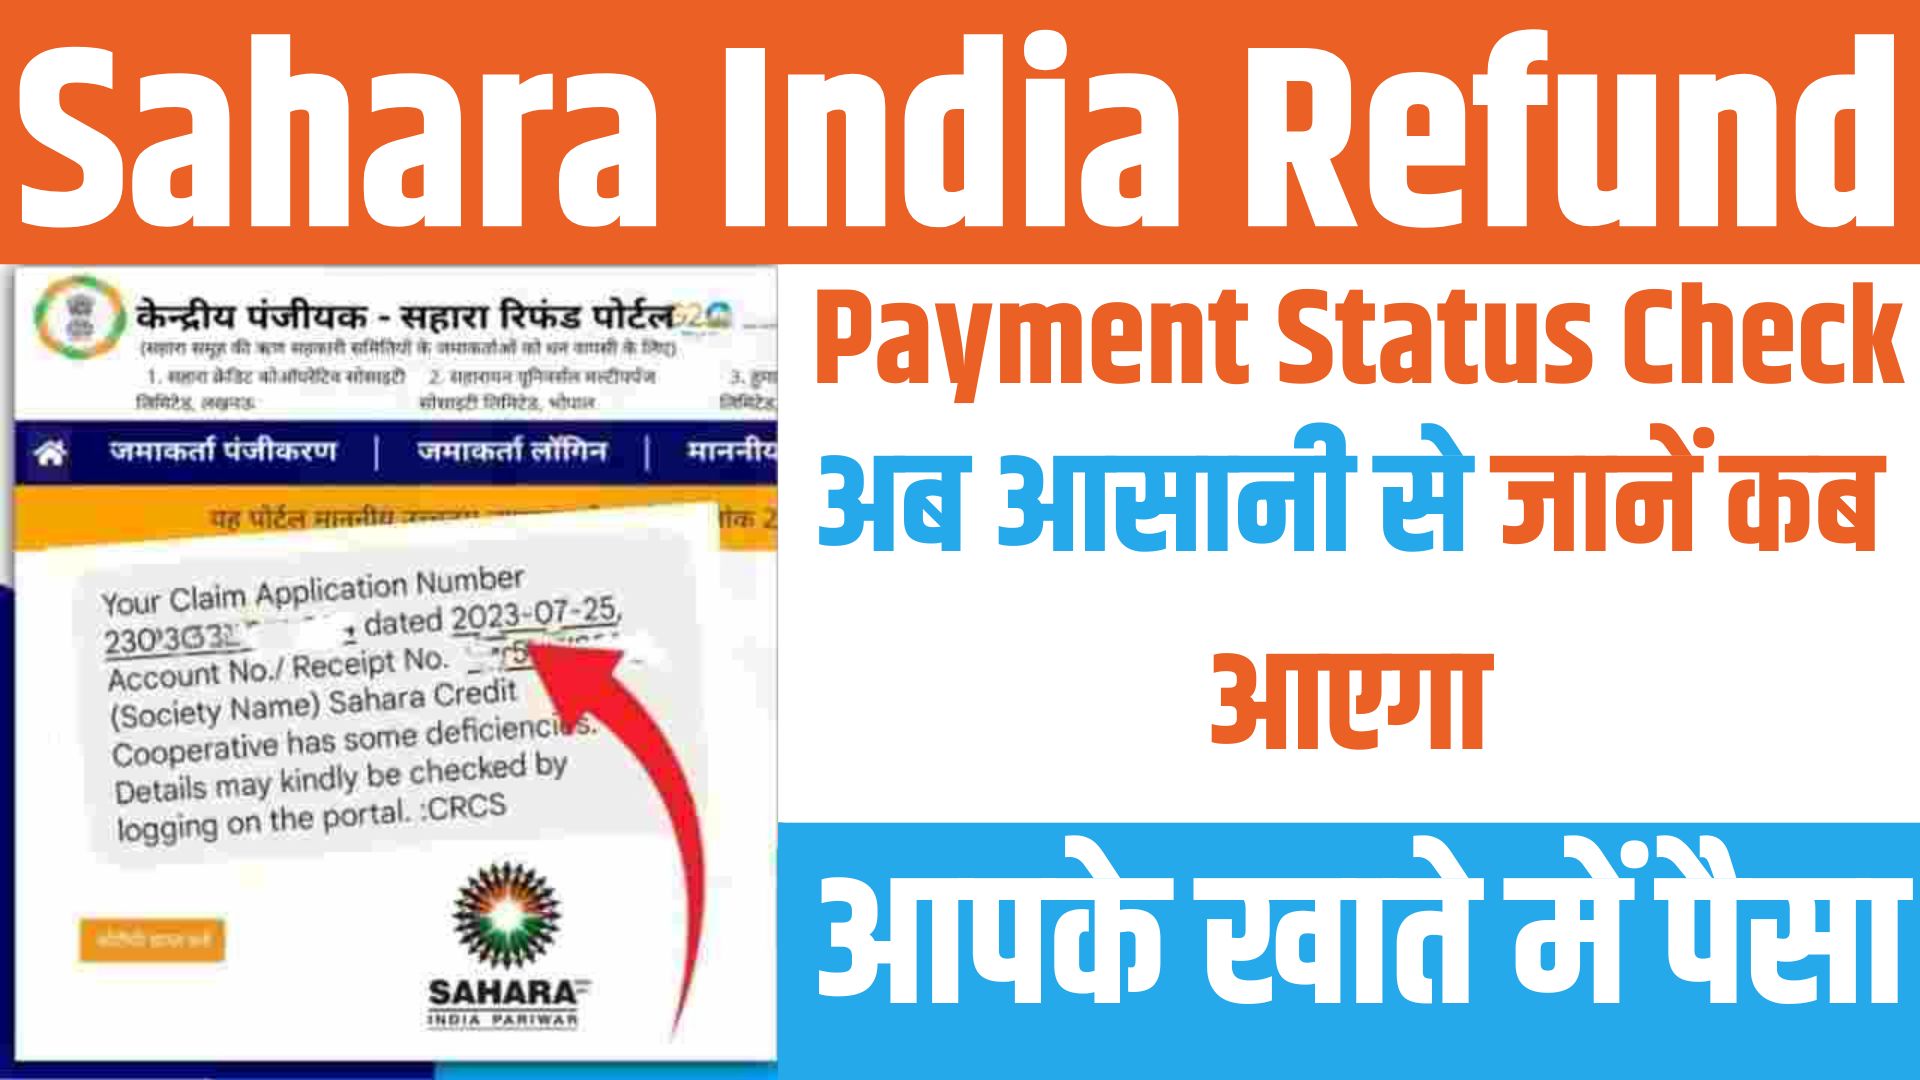 Sahara India Refund Payment Status Check